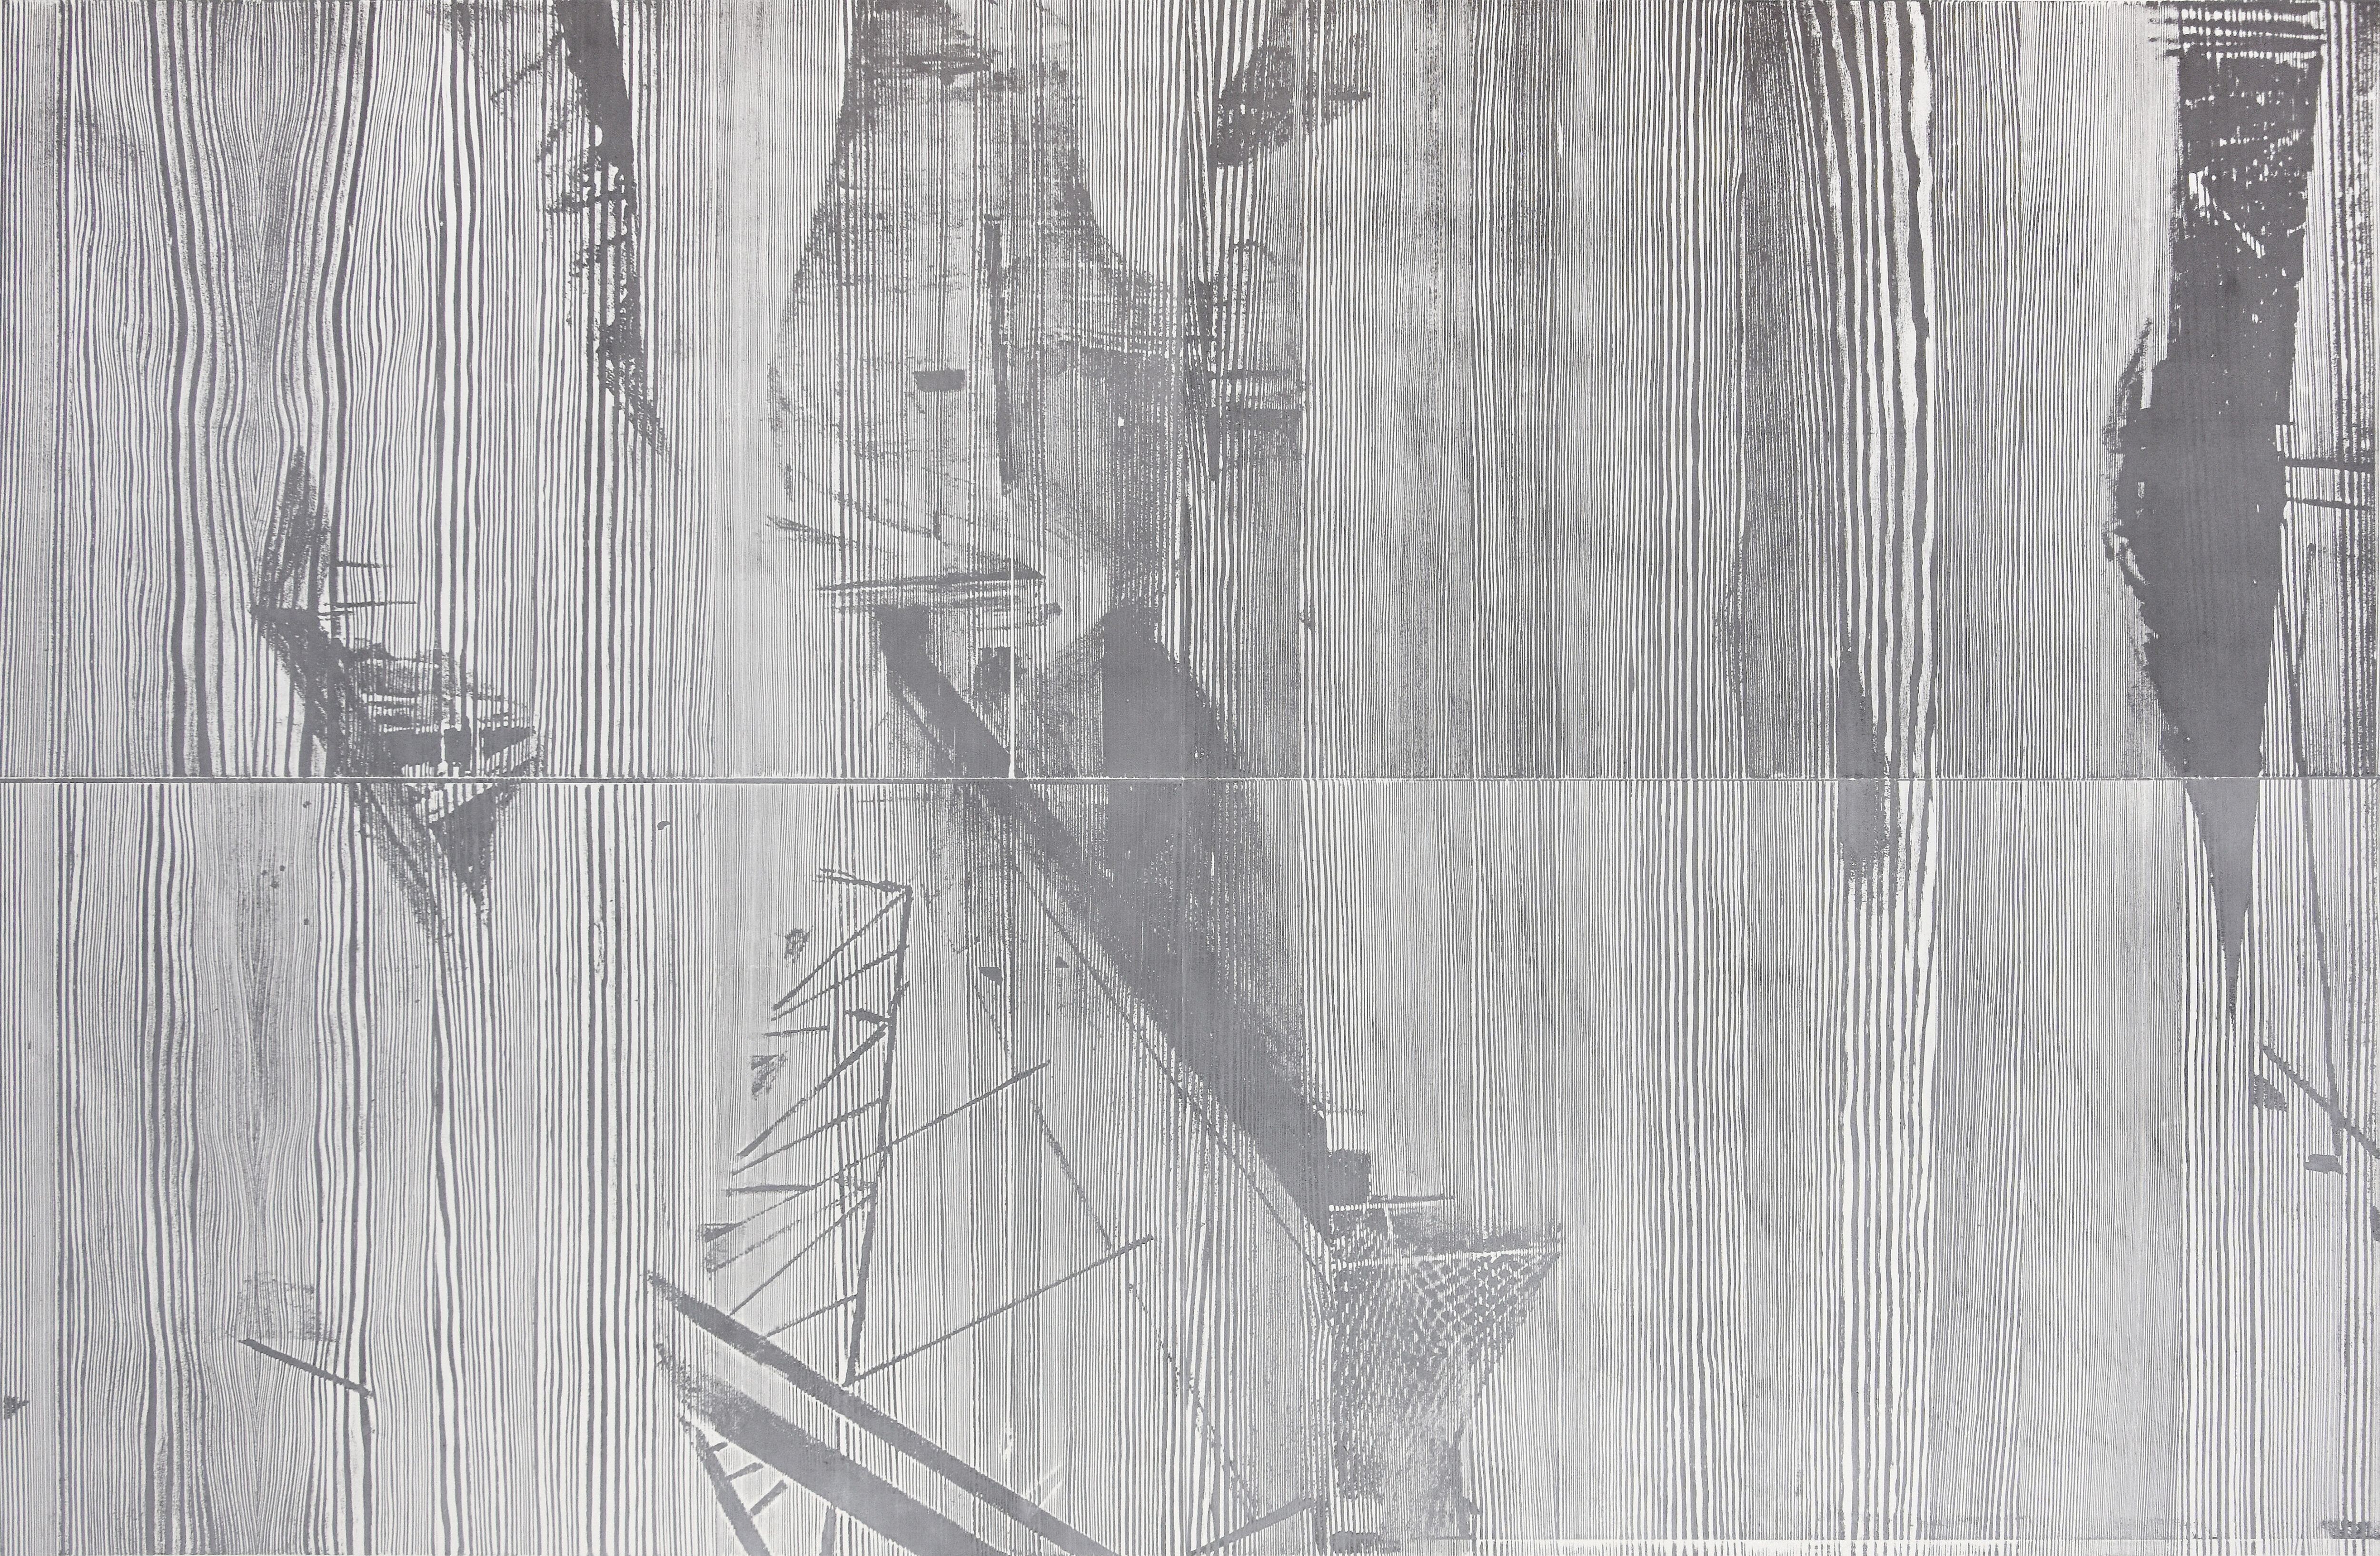 Yoib, 2018, wood engraving (fir), 130,2 x 194,3 cm, Genaro Strobel